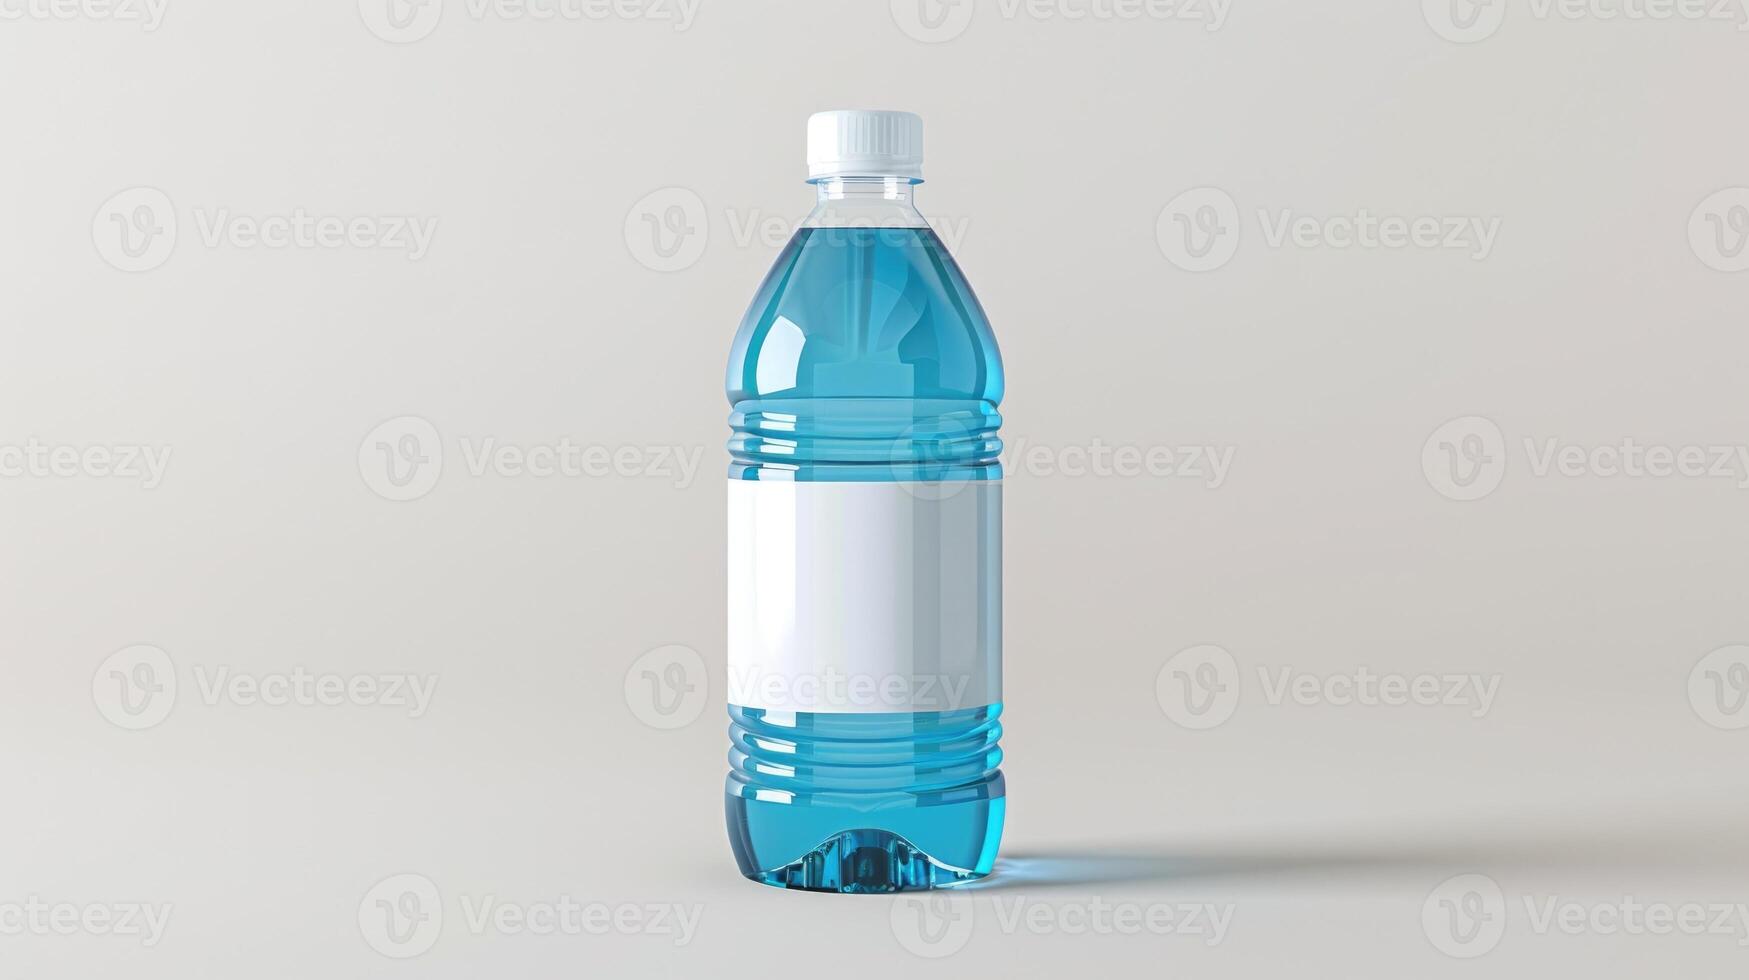 soda agua botella con blanco etiqueta. aislado en blanco foto